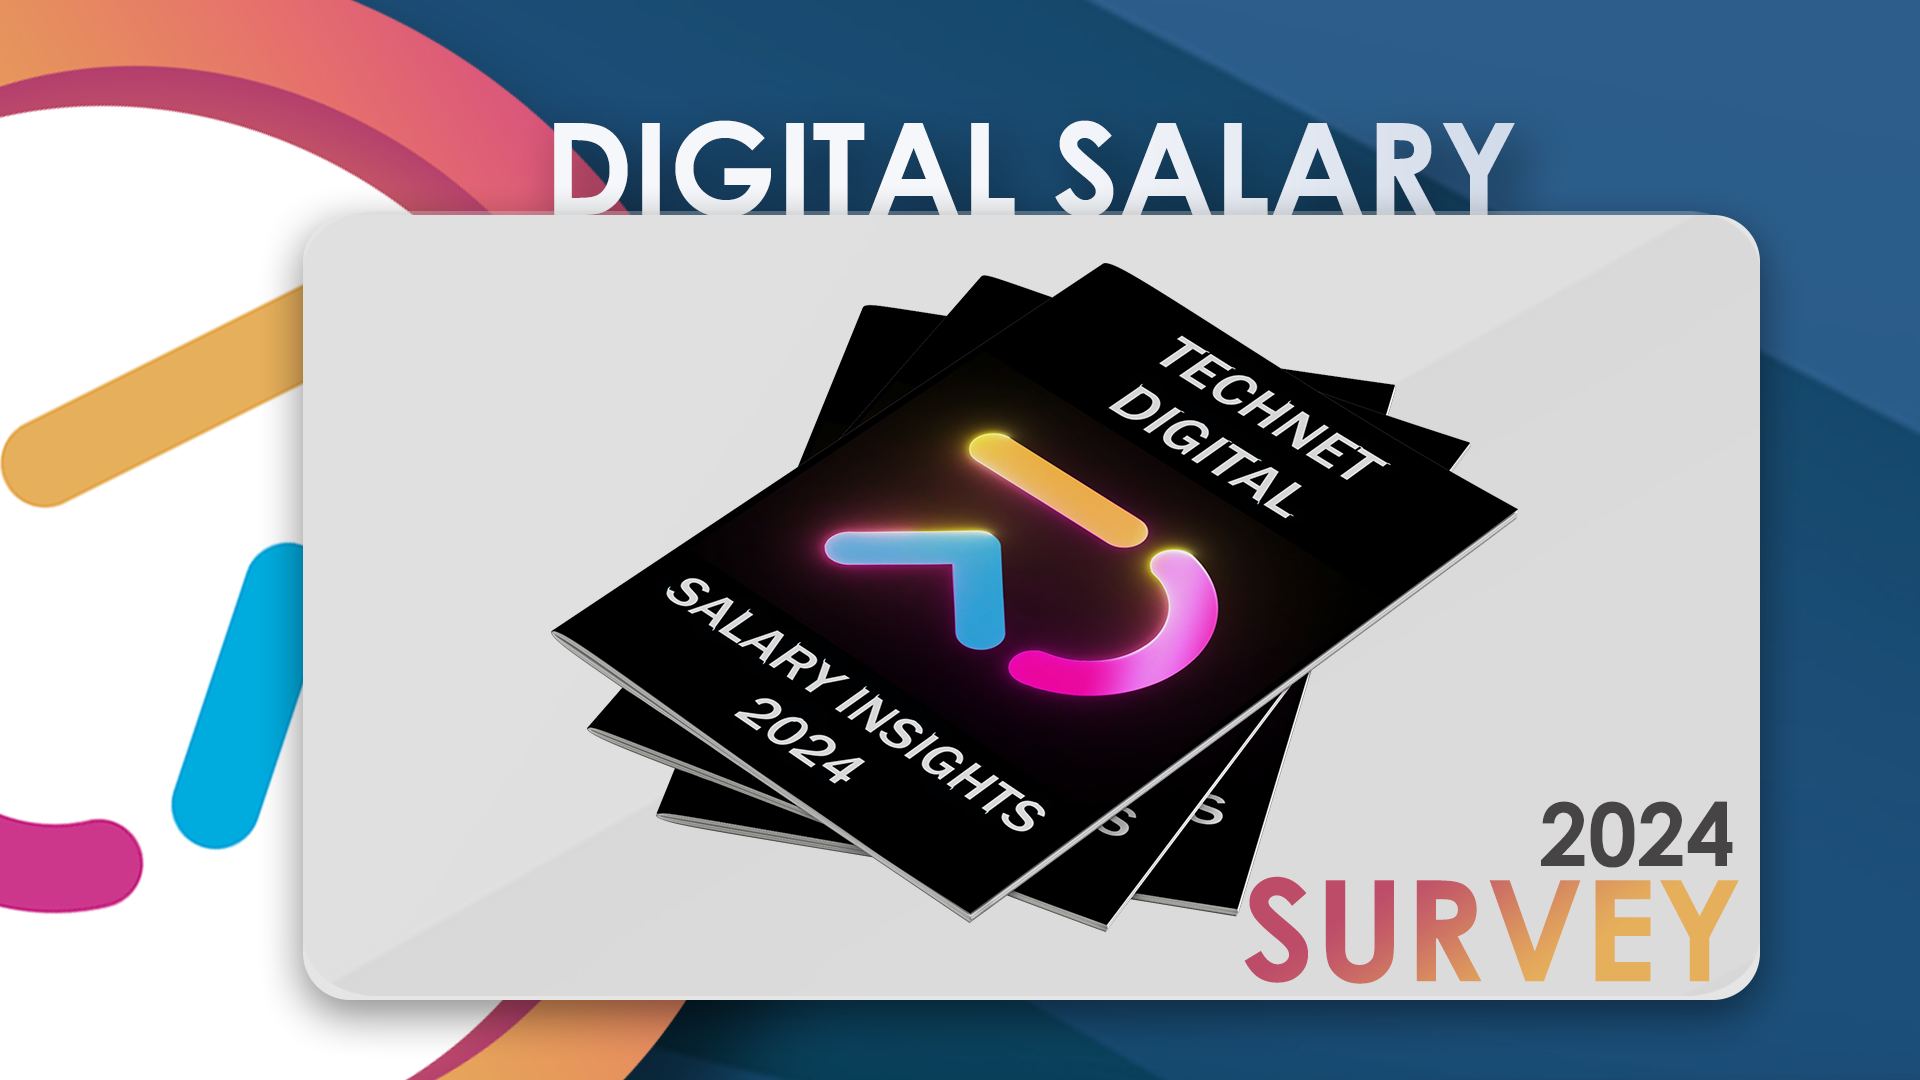 Digital Salary Survey for 2024